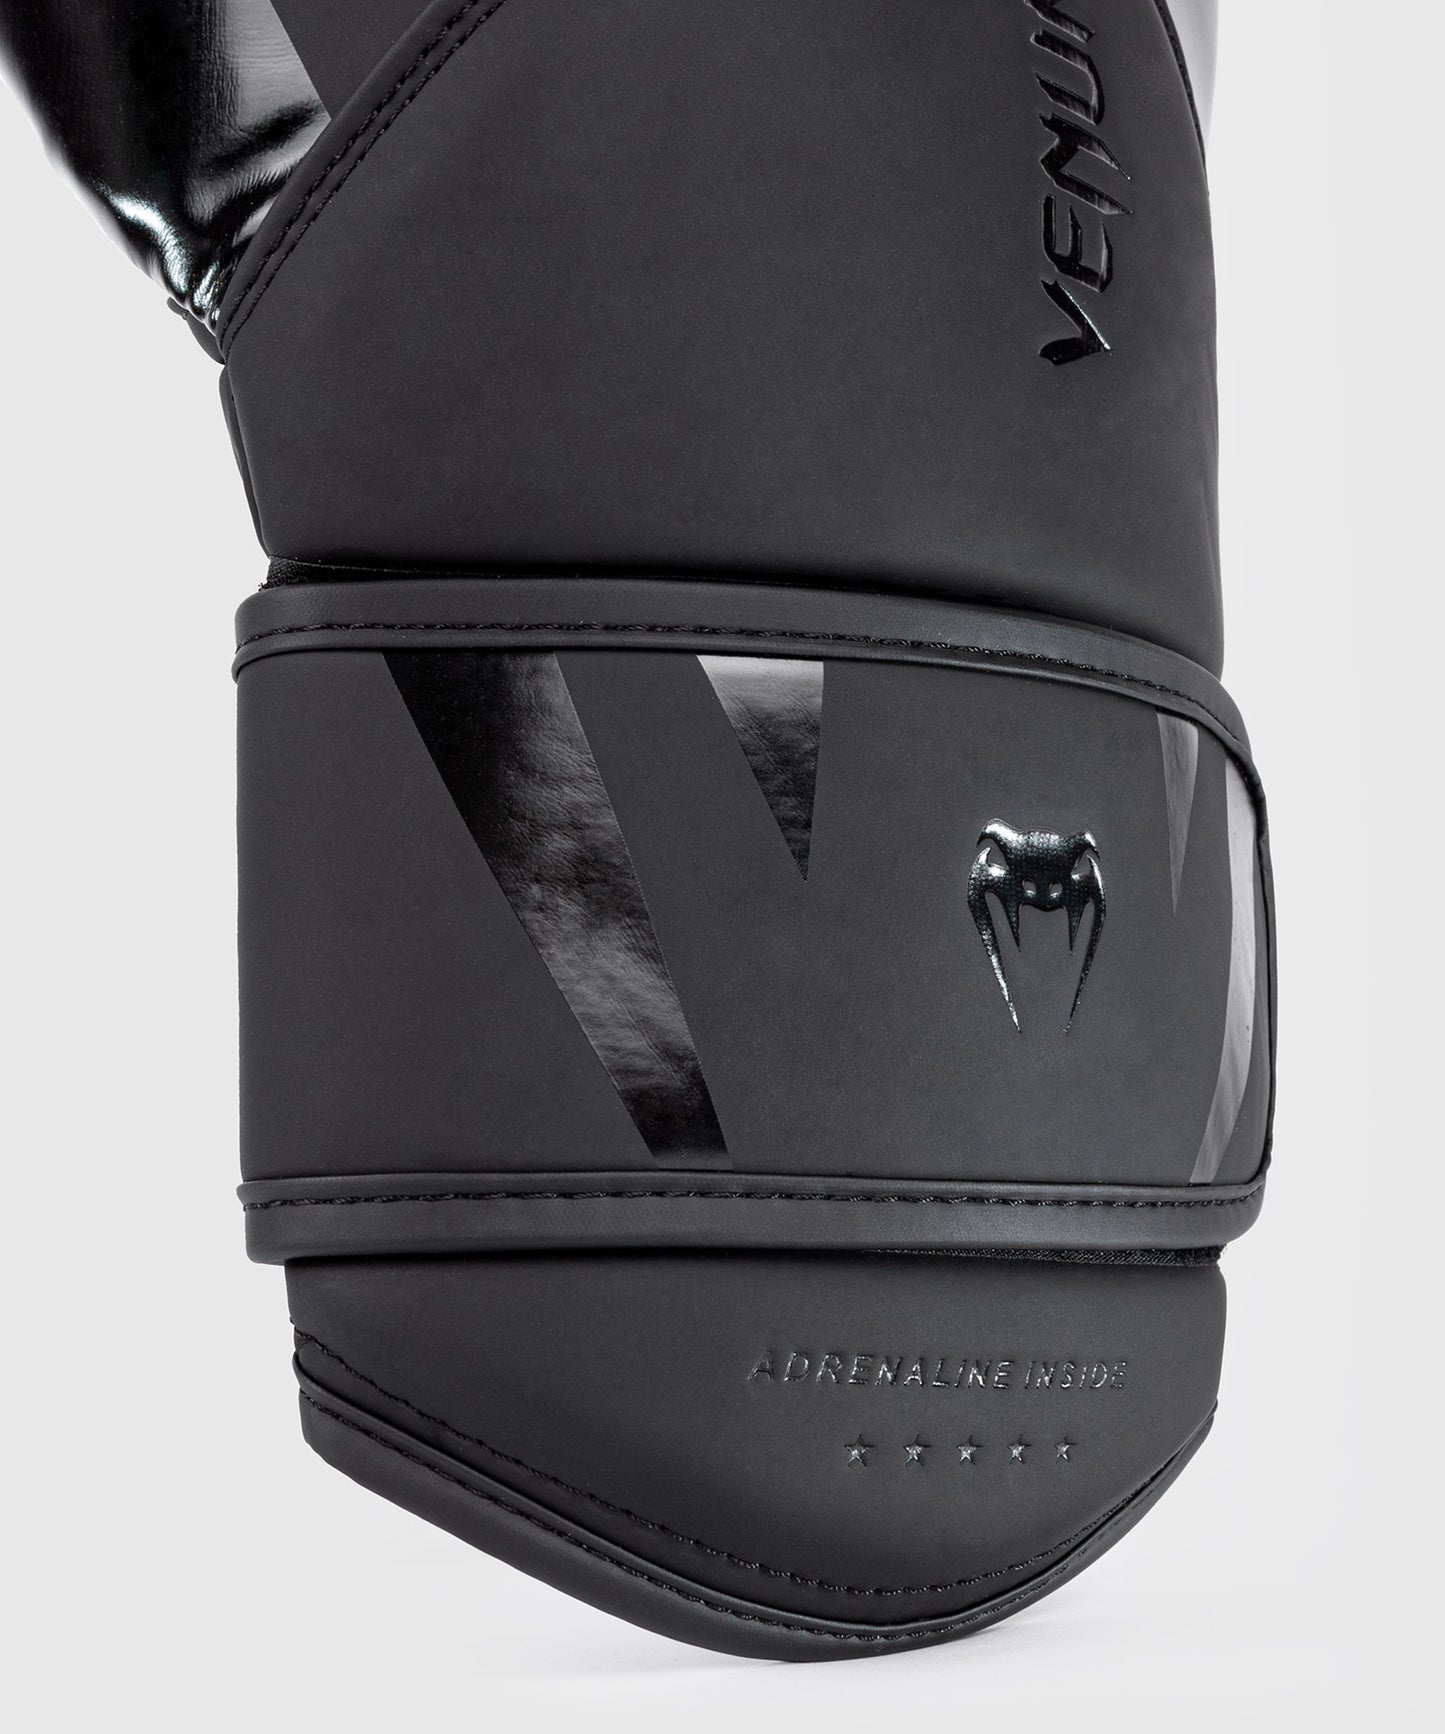 Venum Challenger 4.0 Boxing Gloves - Black/Black